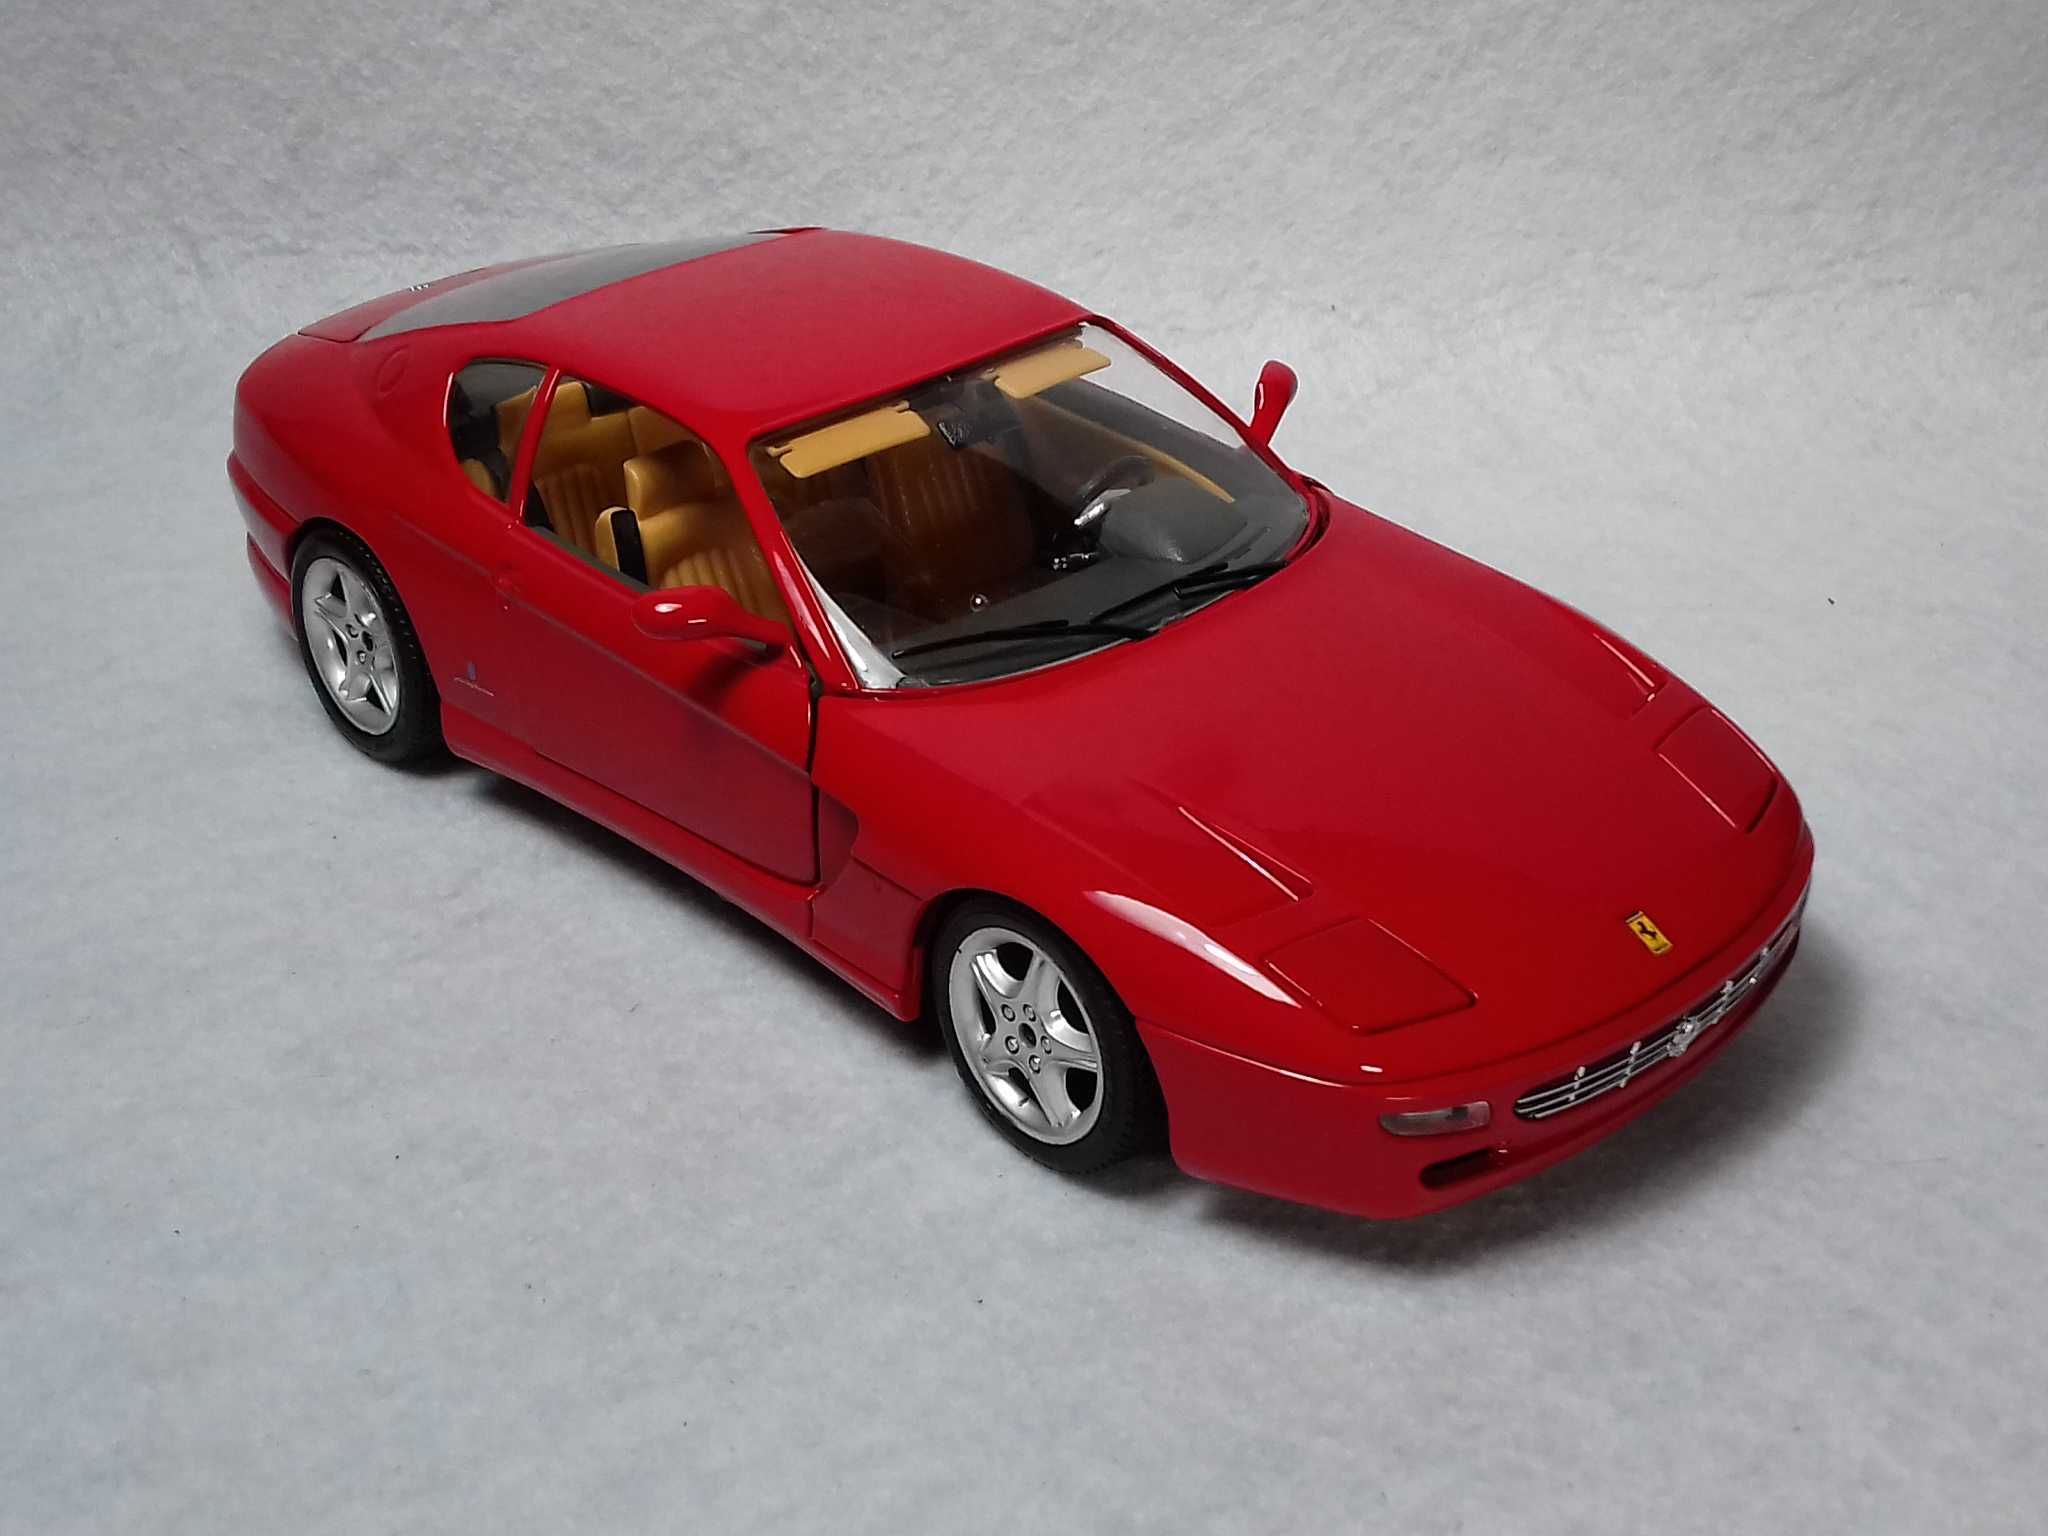 Burago 1:18 - Ferrari 456 GT 1992 - made in Italy!